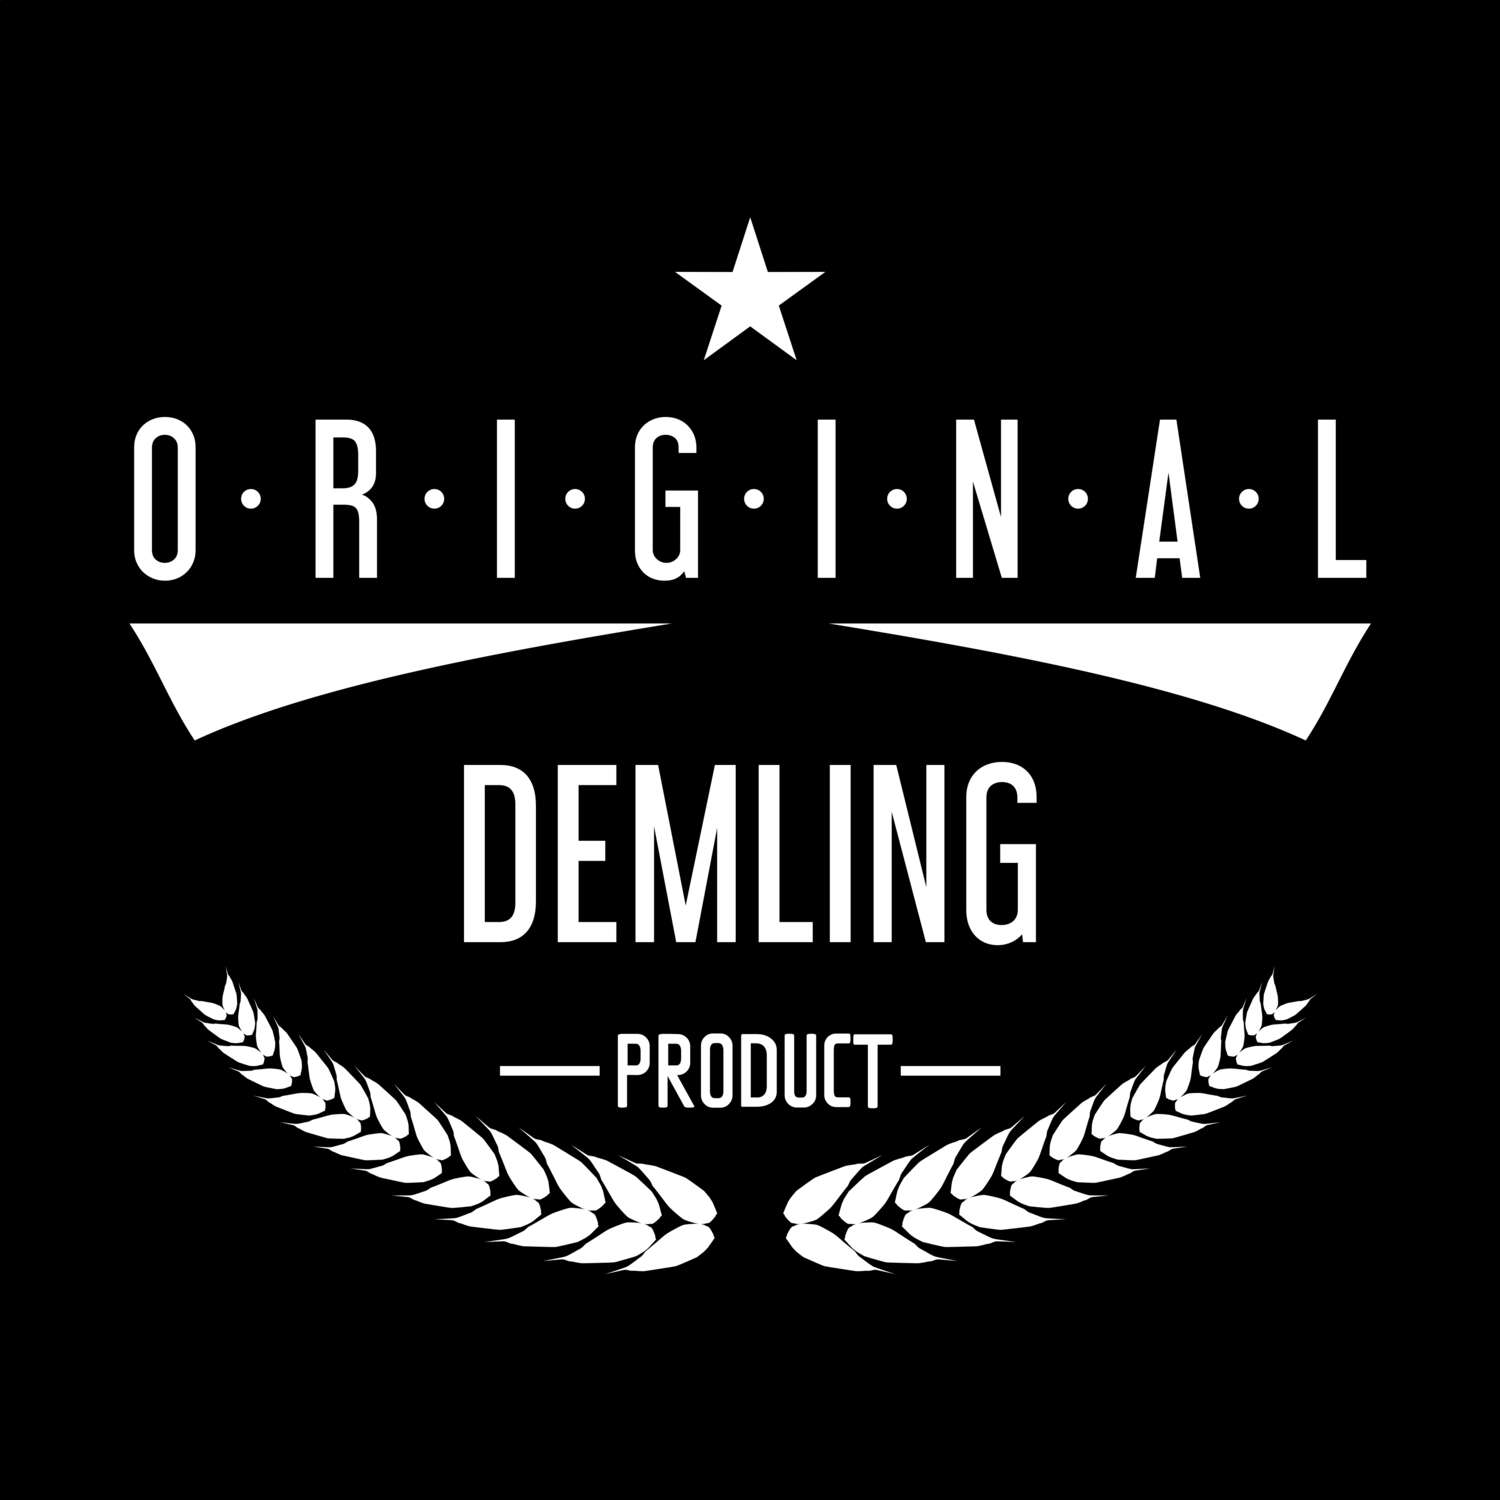 Demling T-Shirt »Original Product«